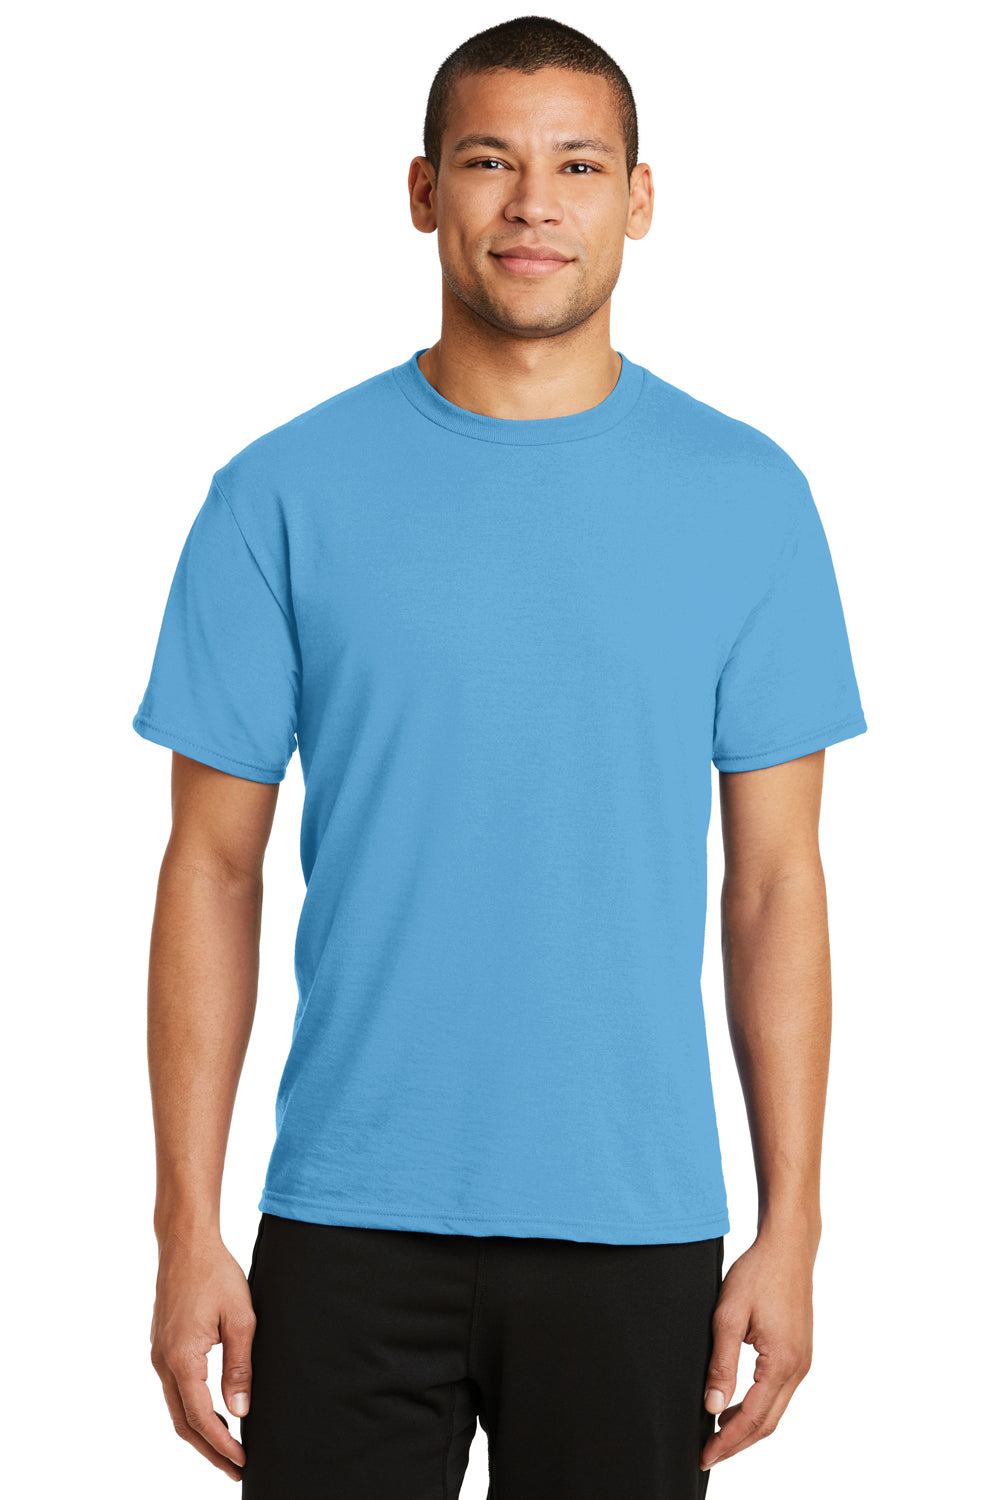 Port & Company PC381 Mens Dry Zone Performance Moisture Wicking Short Sleeve Crewneck T-Shirt Aqua Blue Front